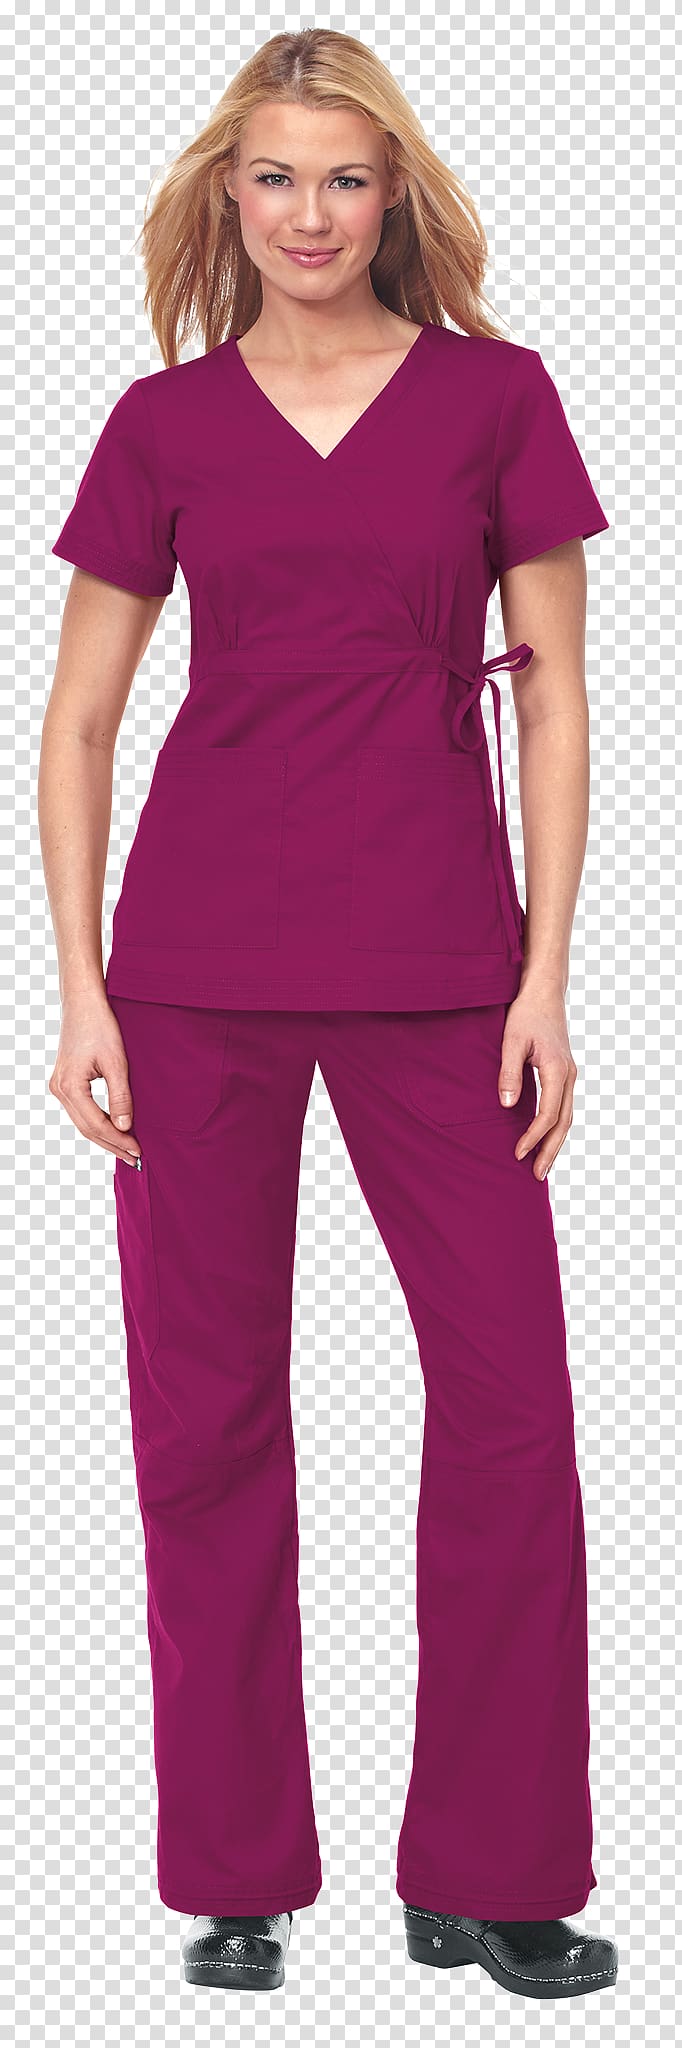 Scrubs Uniform Nurse Clothing Nursing care, Raspberries from top transparent background PNG clipart